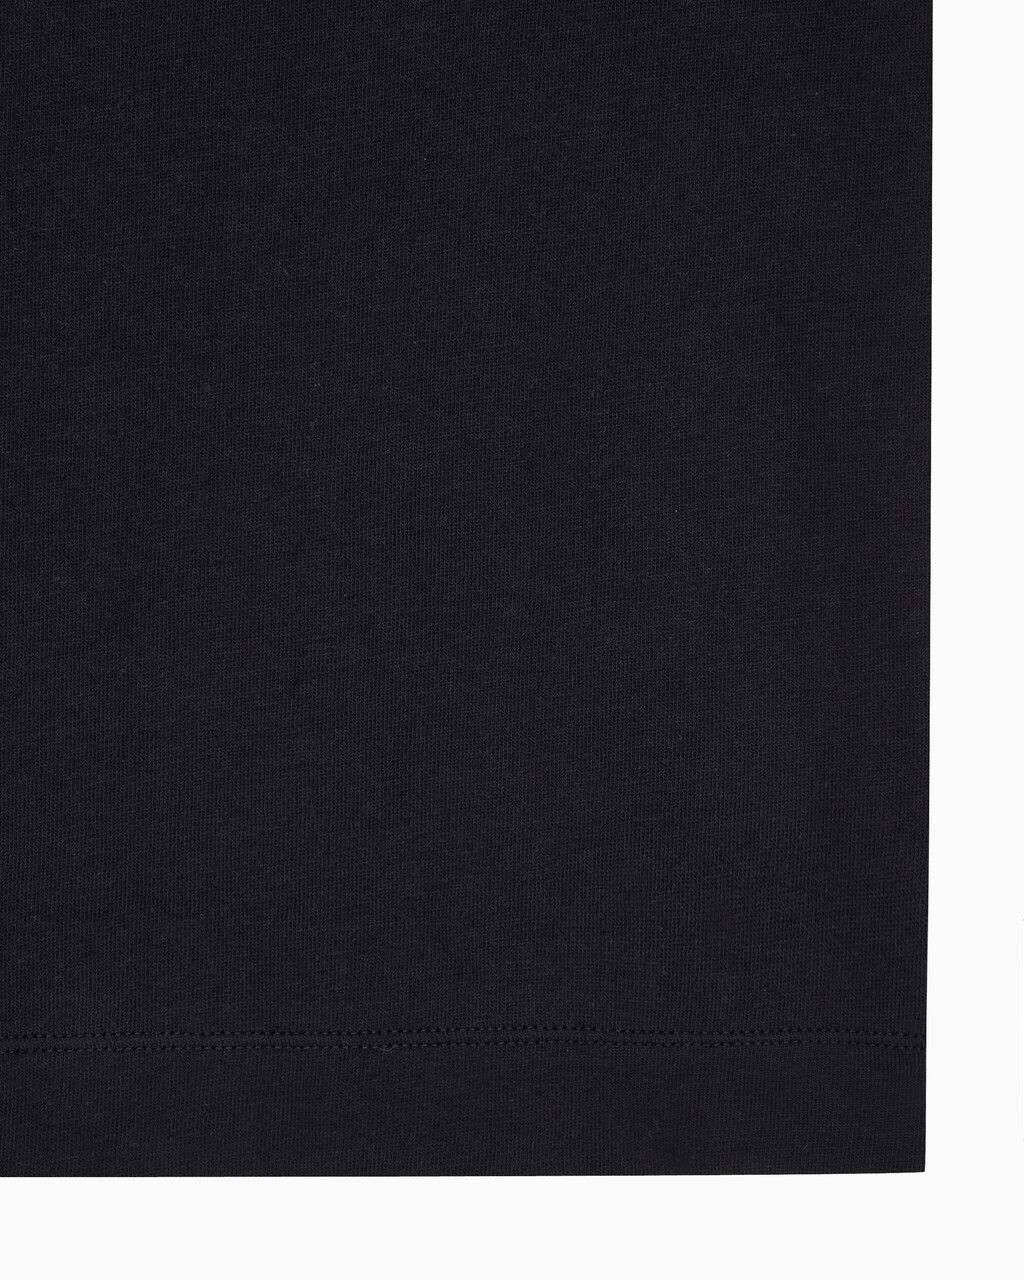 Buy 여성 릴렉스 핏 볼드 로고 반팔 티셔츠 in color BLACK